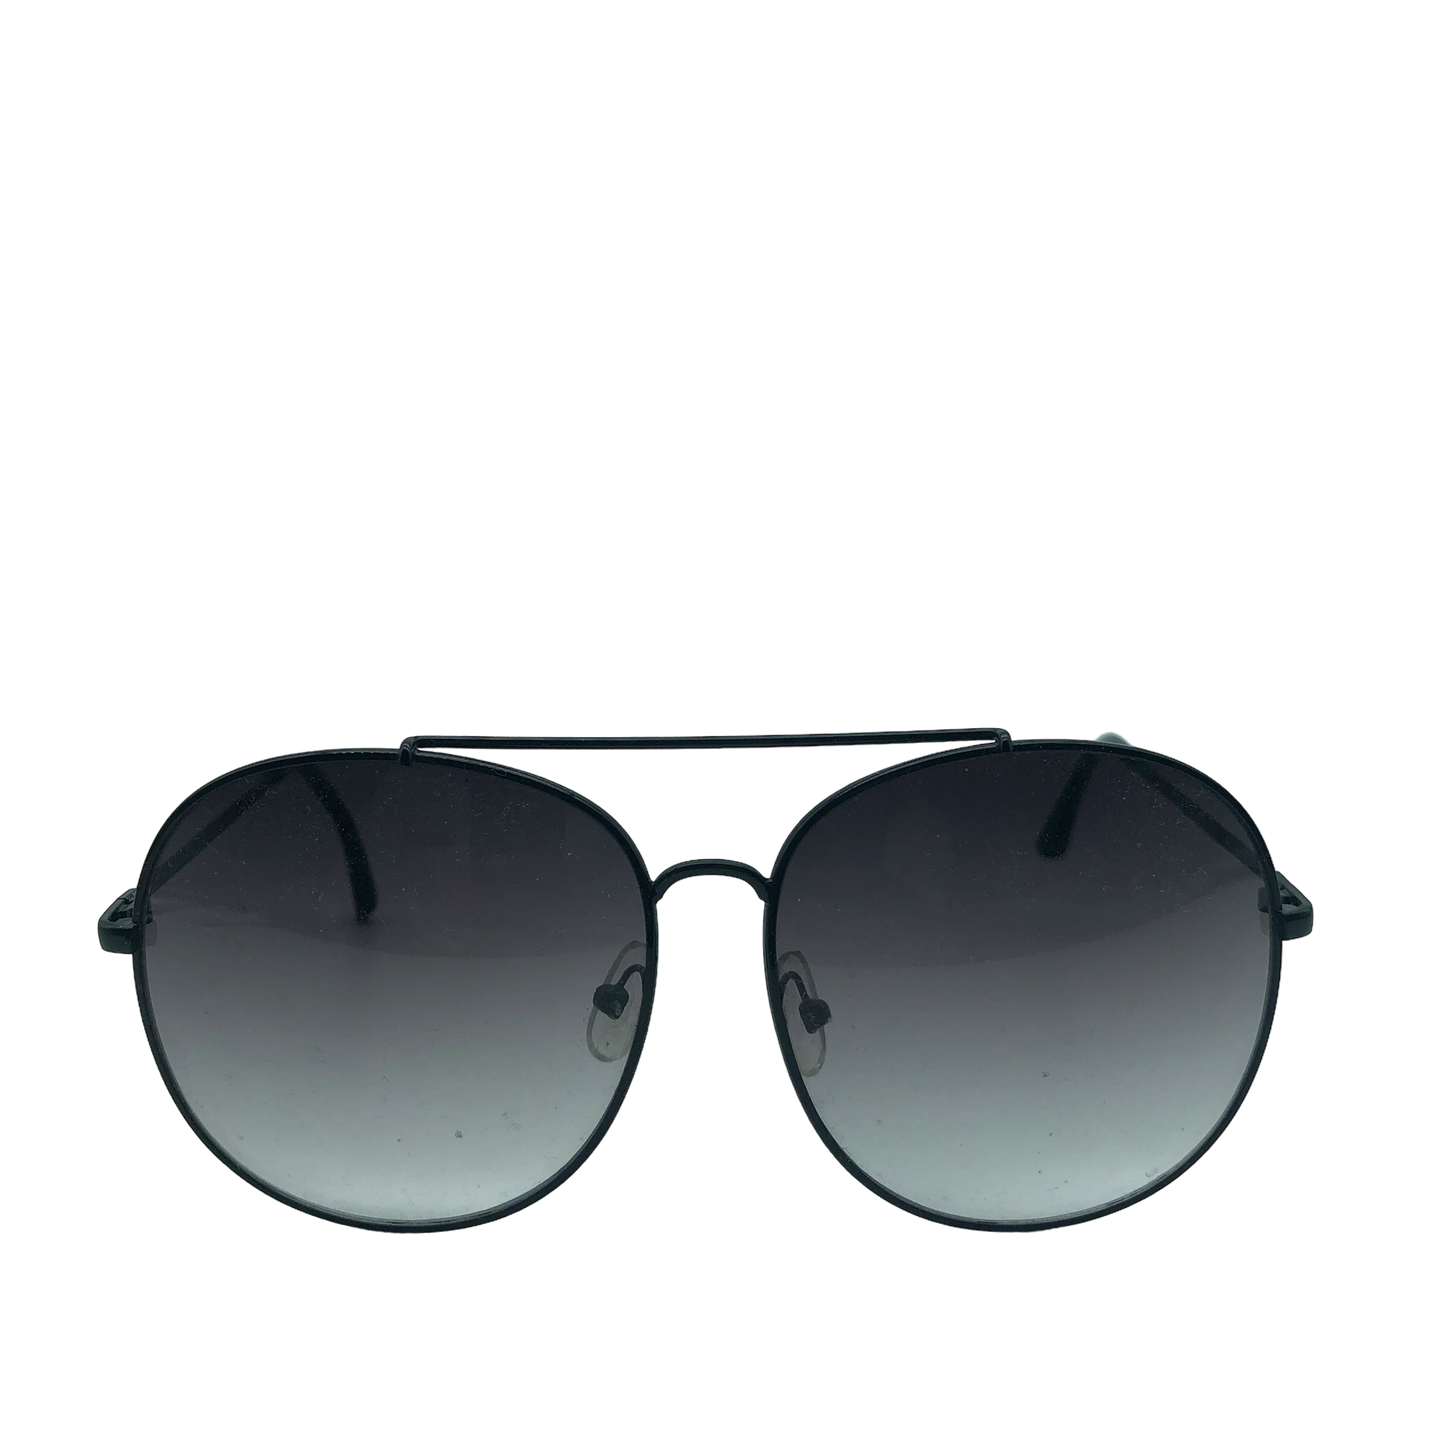 Sunglasses By Cmc